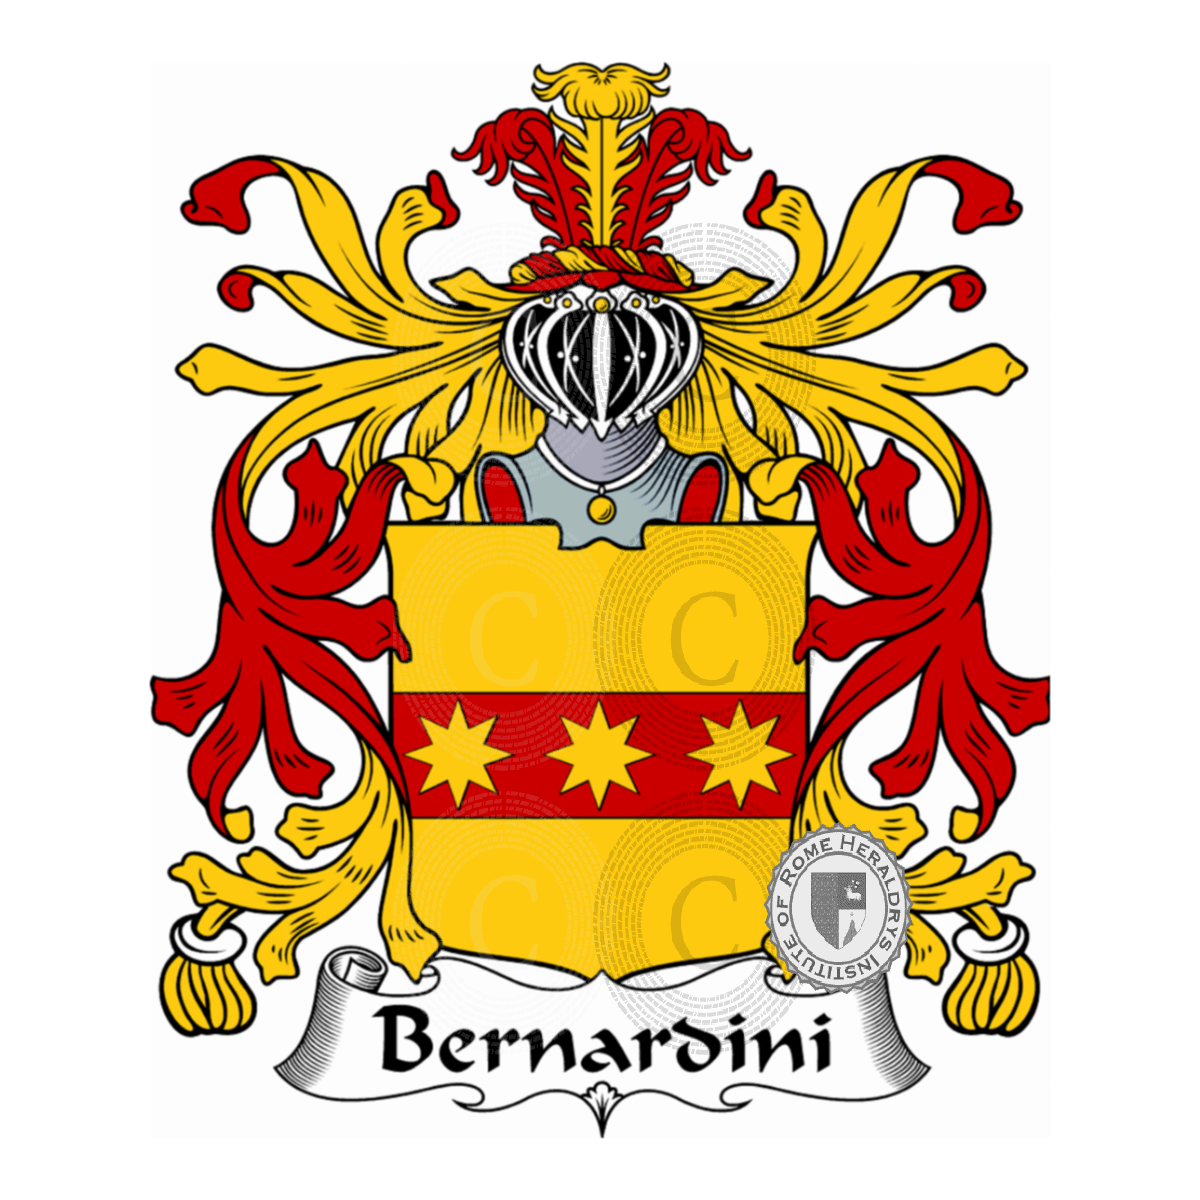 Brasão da famíliaBernardini, Bernardini del Guanto,Bernardini dell'Alietta